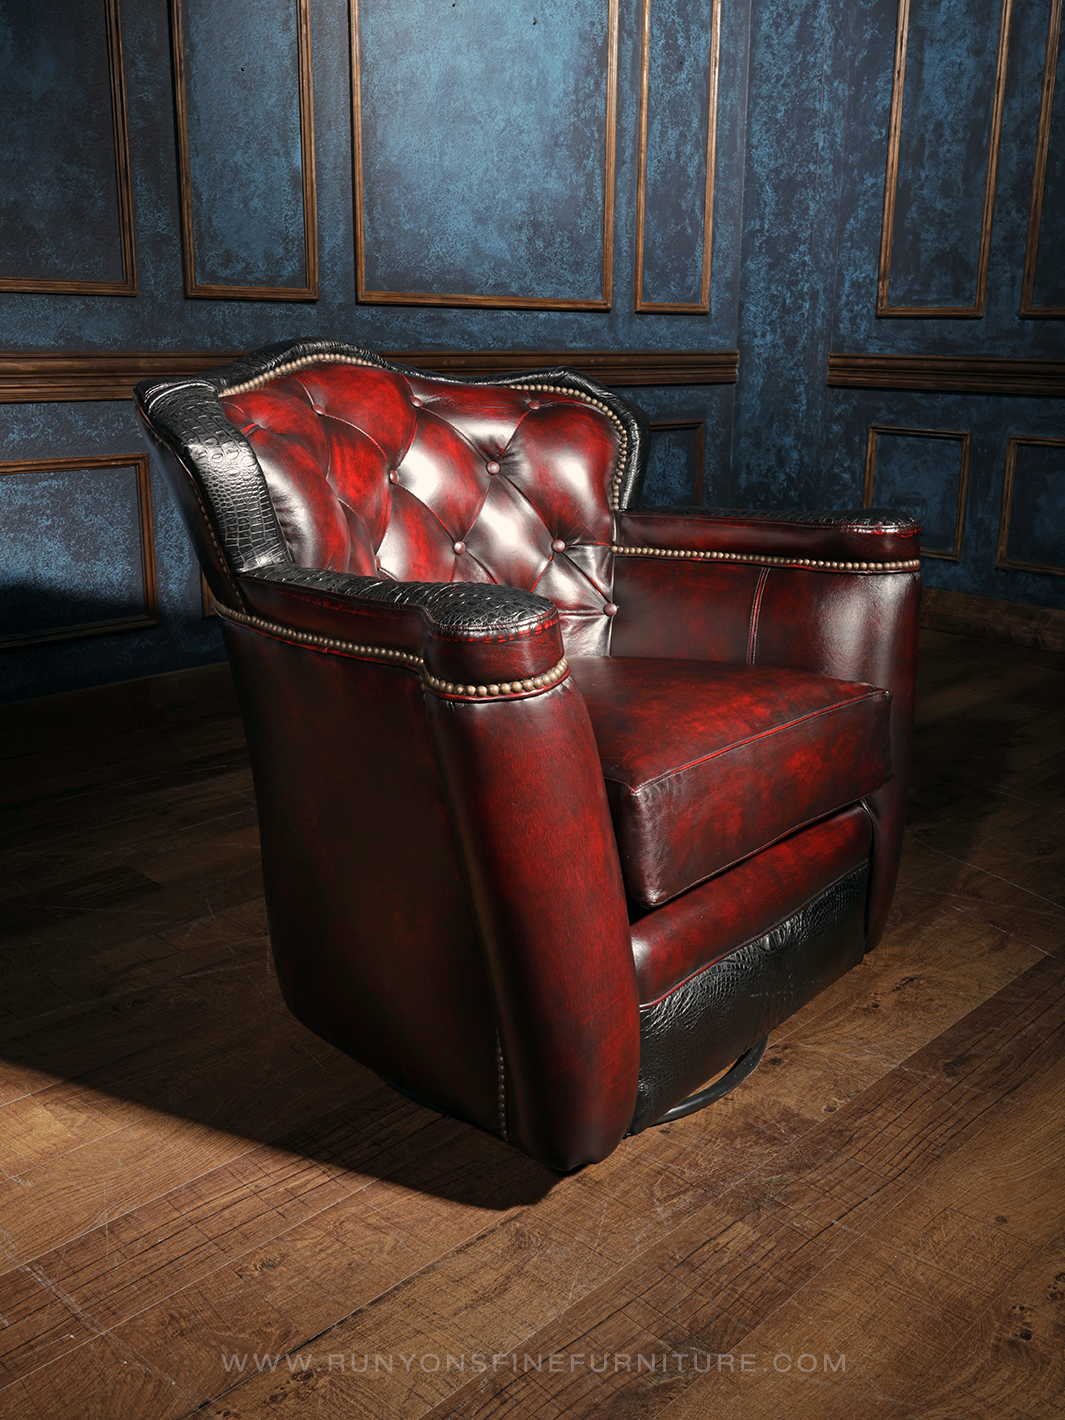 Nile Clemson Leather Swivel Chair